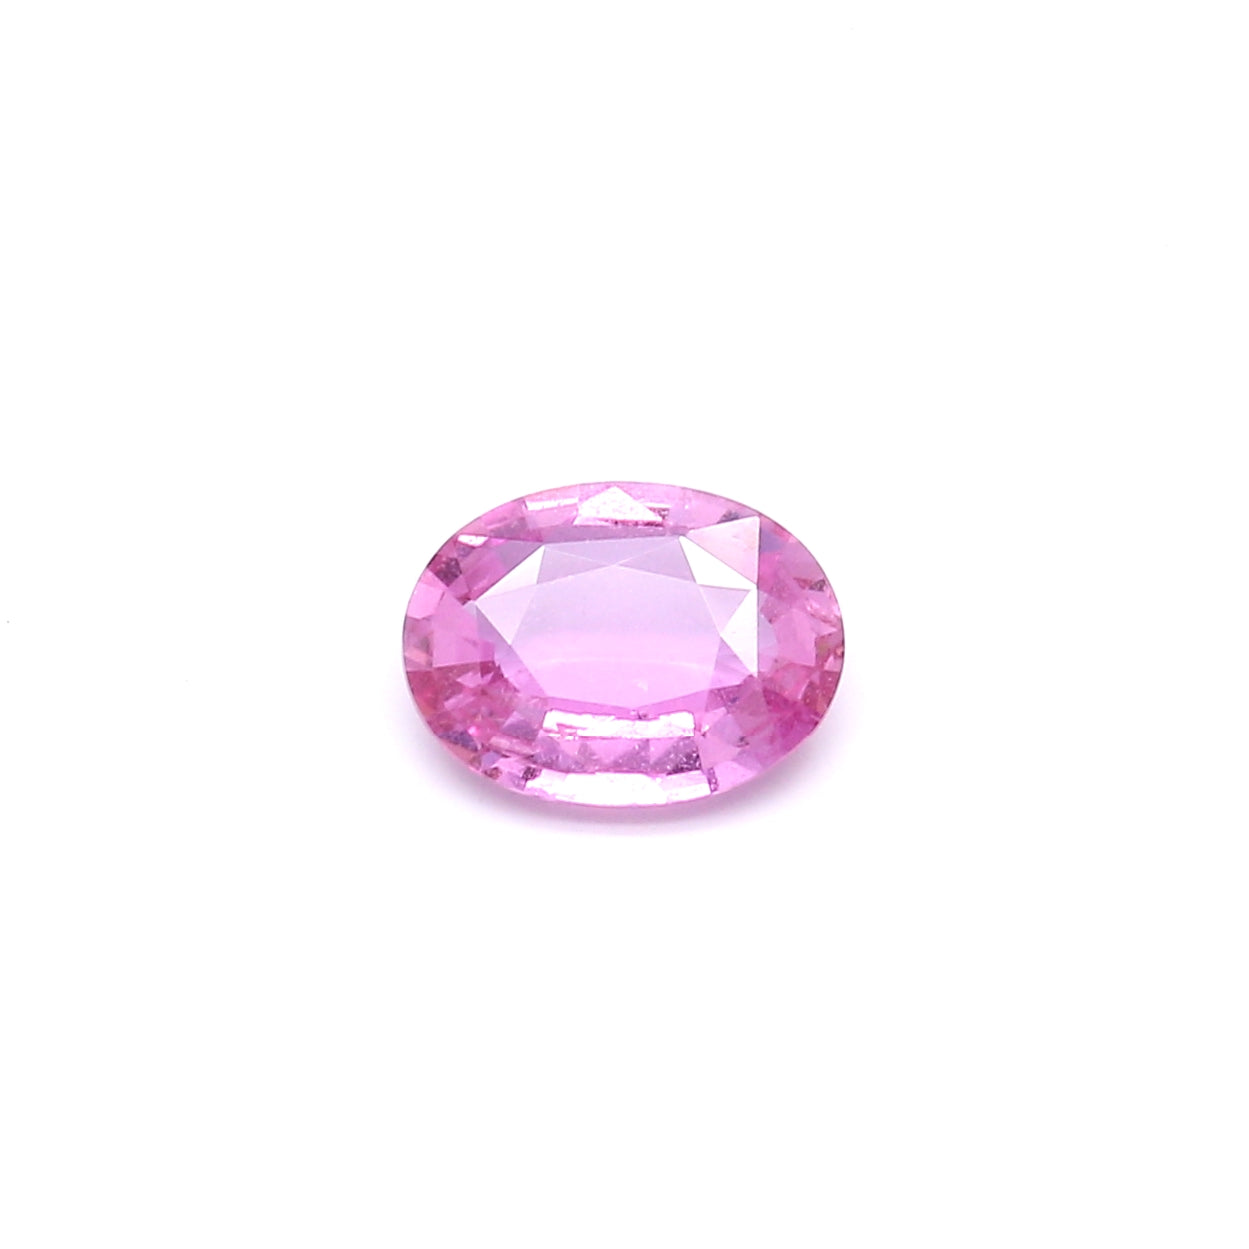 1.13ct Pink, Oval Sapphire, Heated, Madagascar - 7.79 x 5.84 x 2.70mm